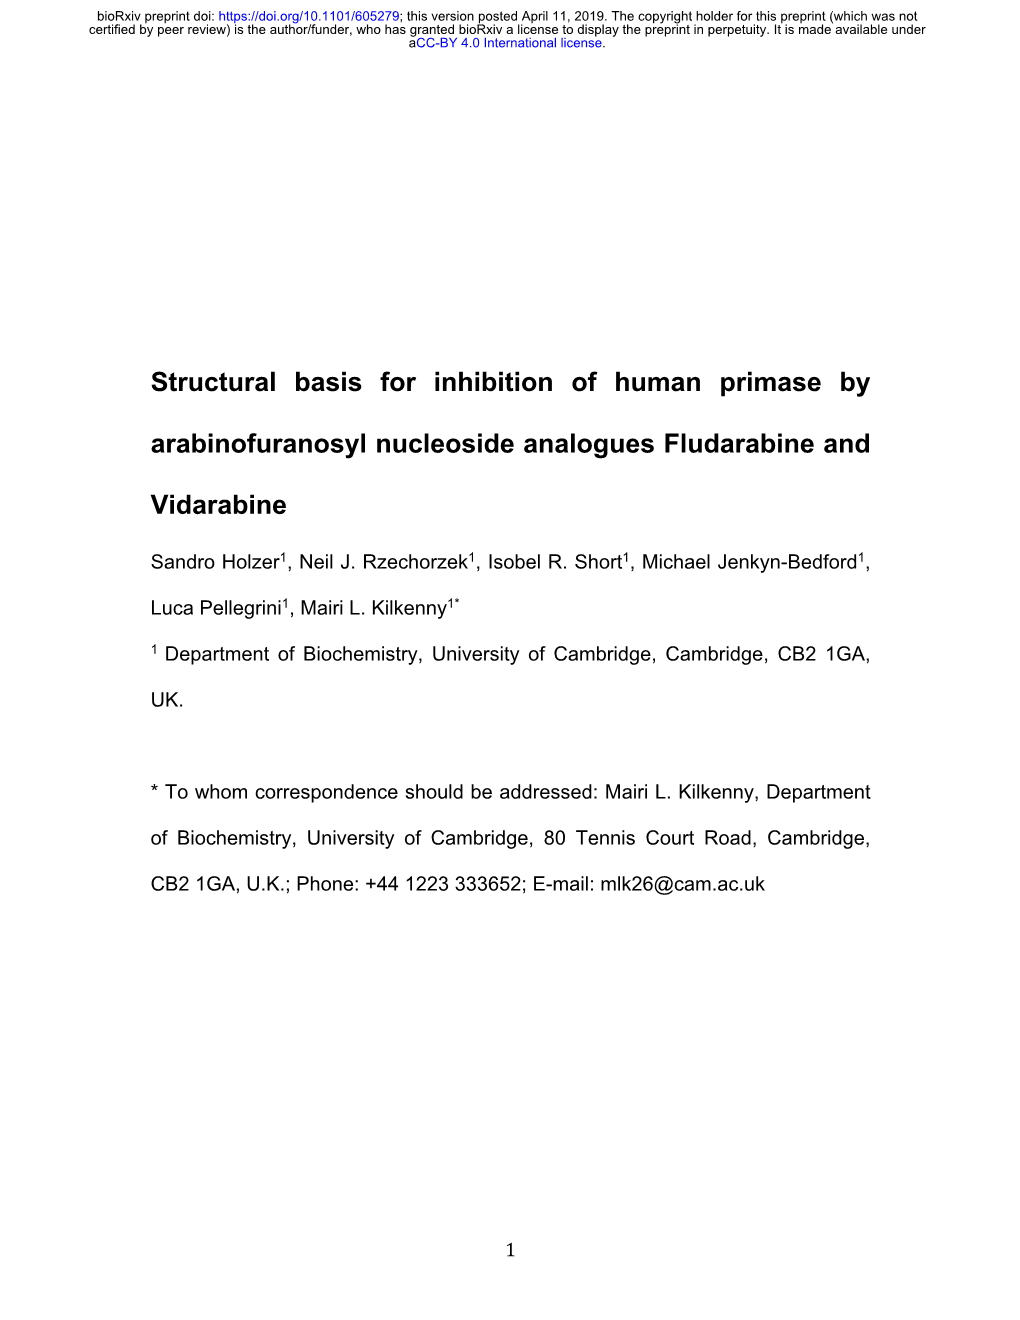 Structural Basis for Inhibition of Human Primase by Arabinofuranosyl